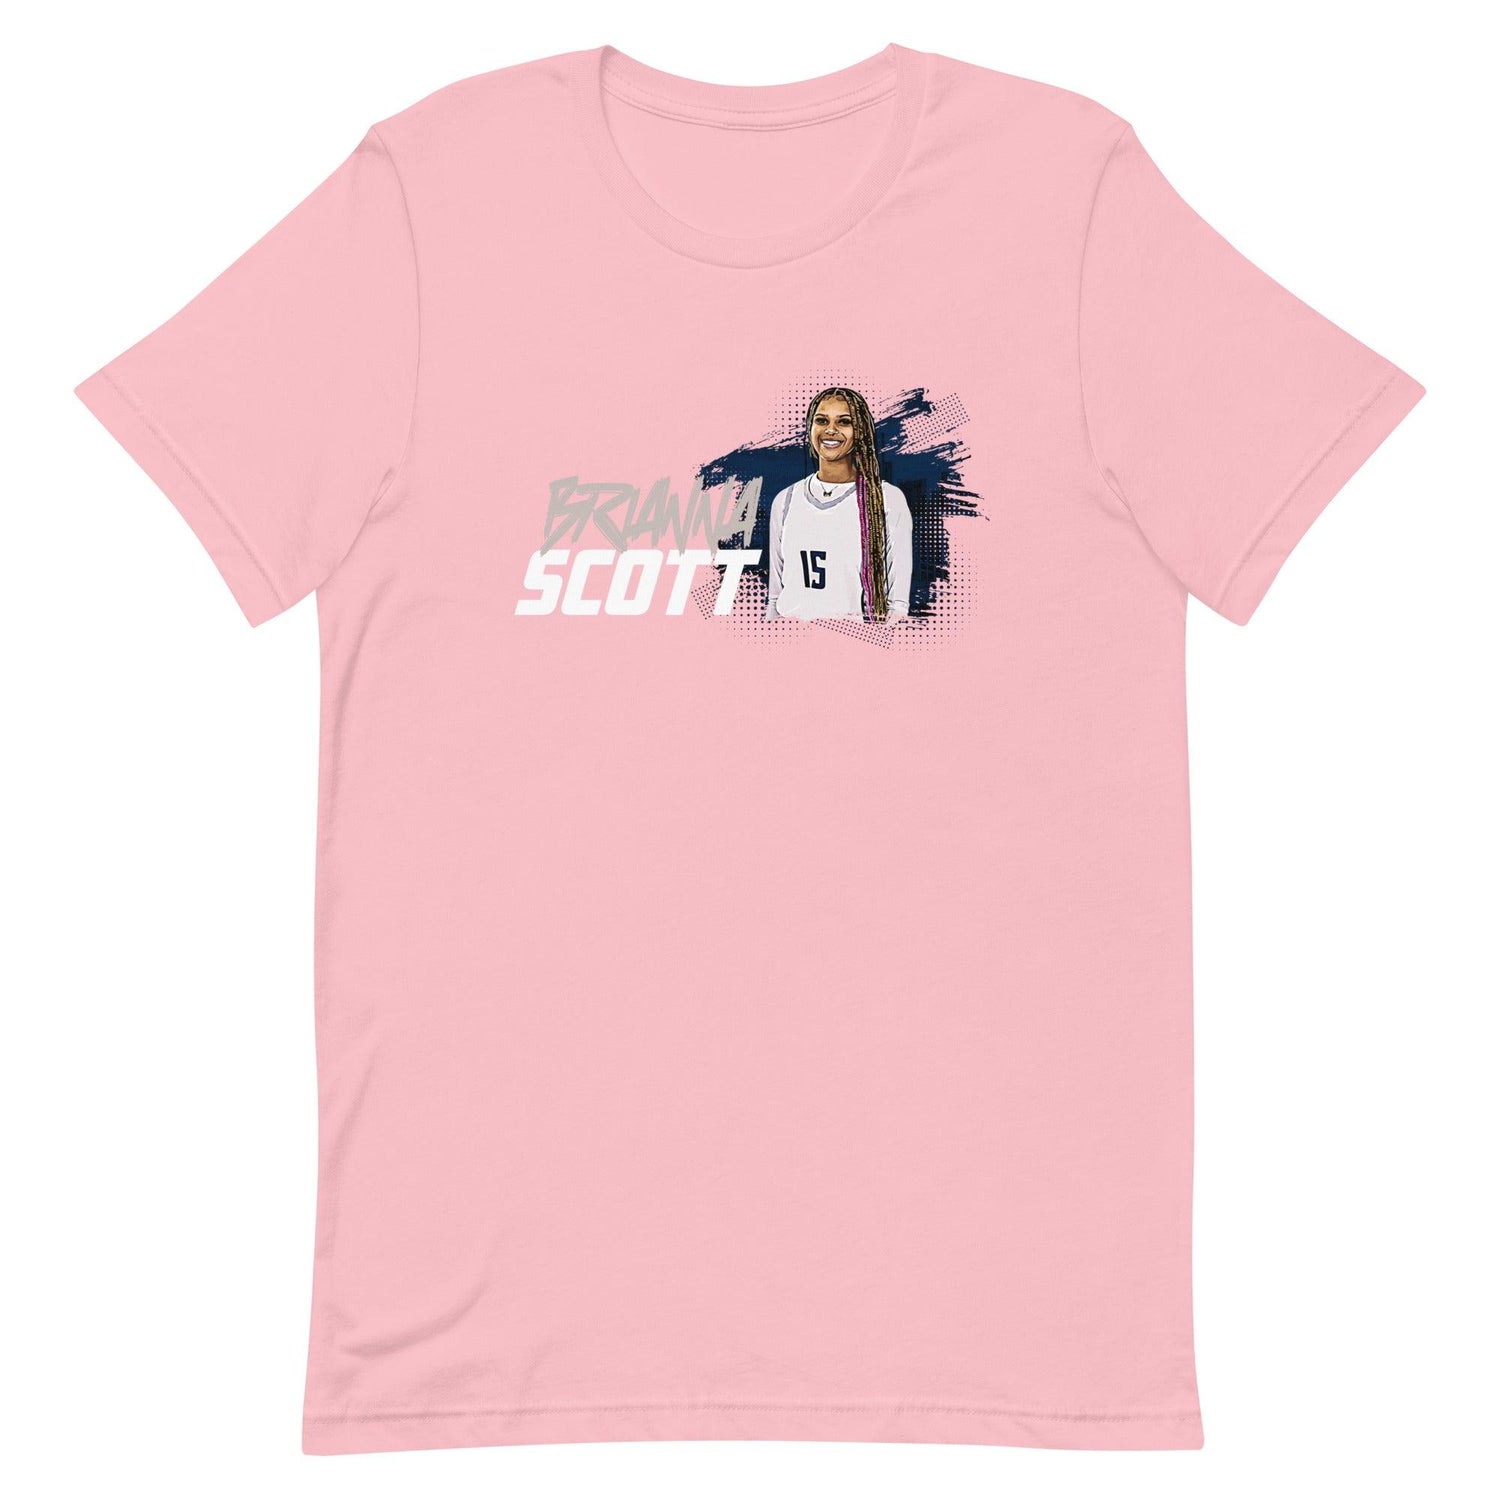 Brianna Scott "Gameday" t-shirt - Fan Arch